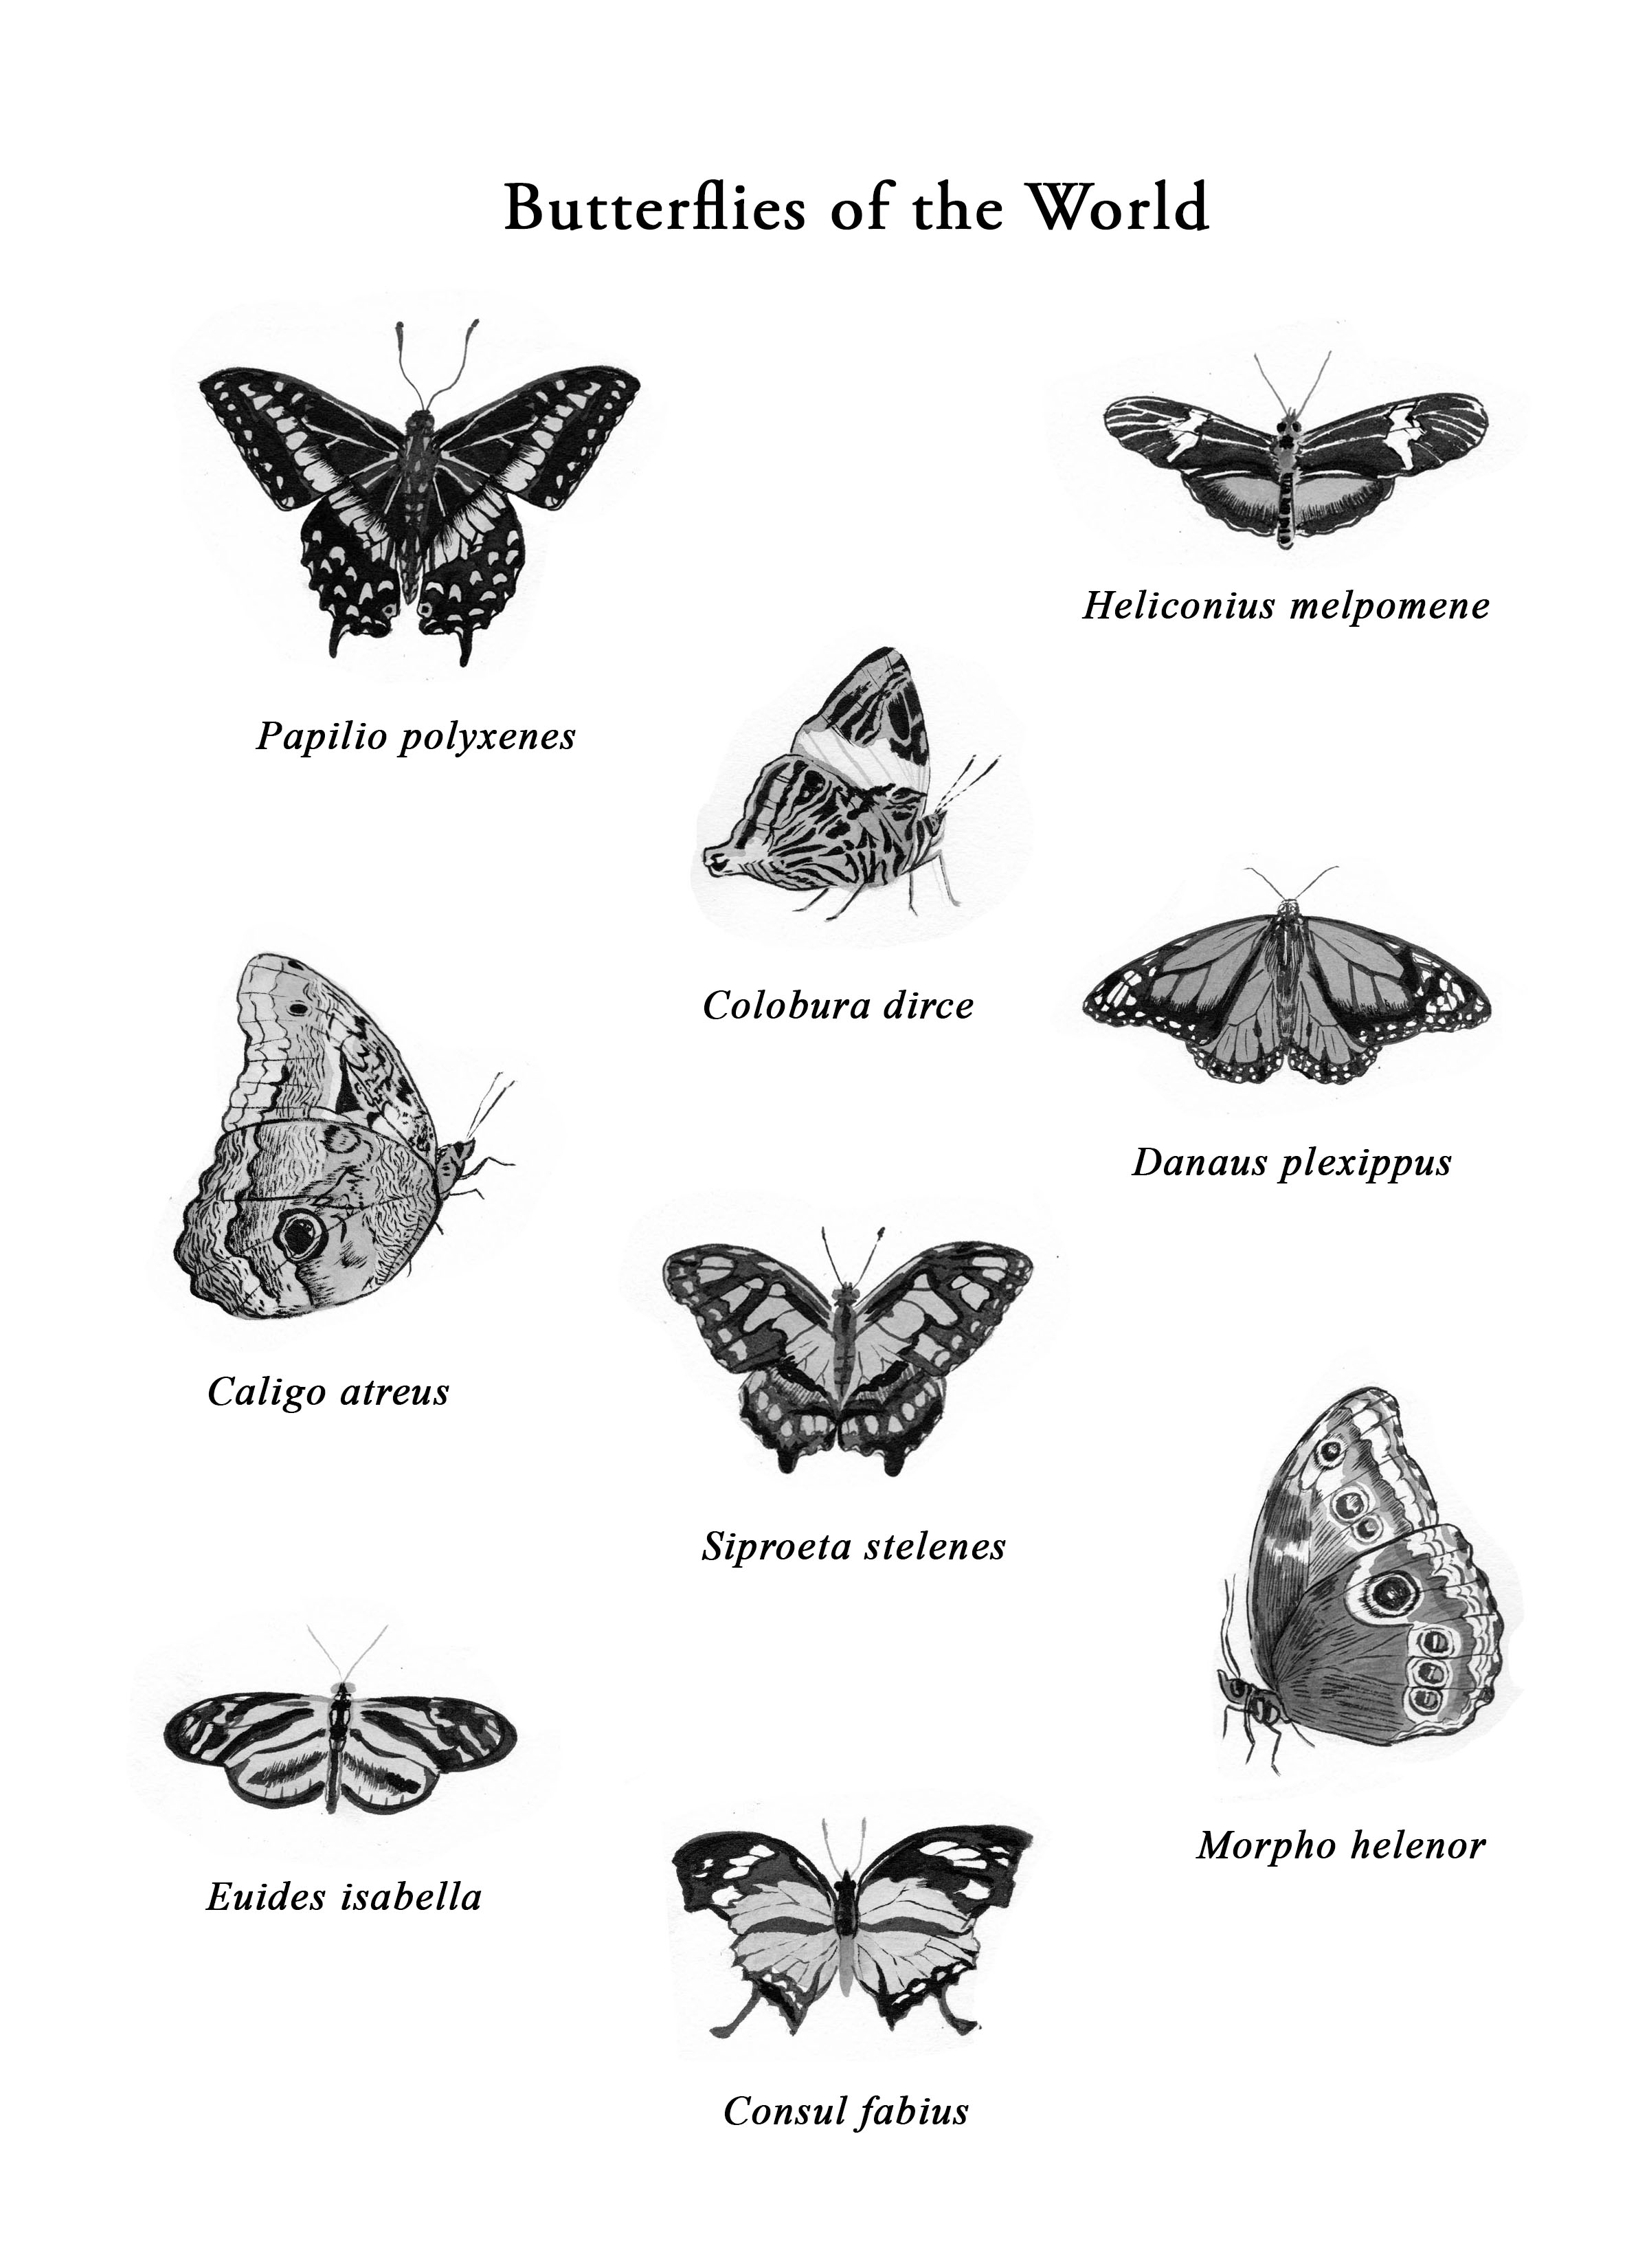 Butterflies of the world copy